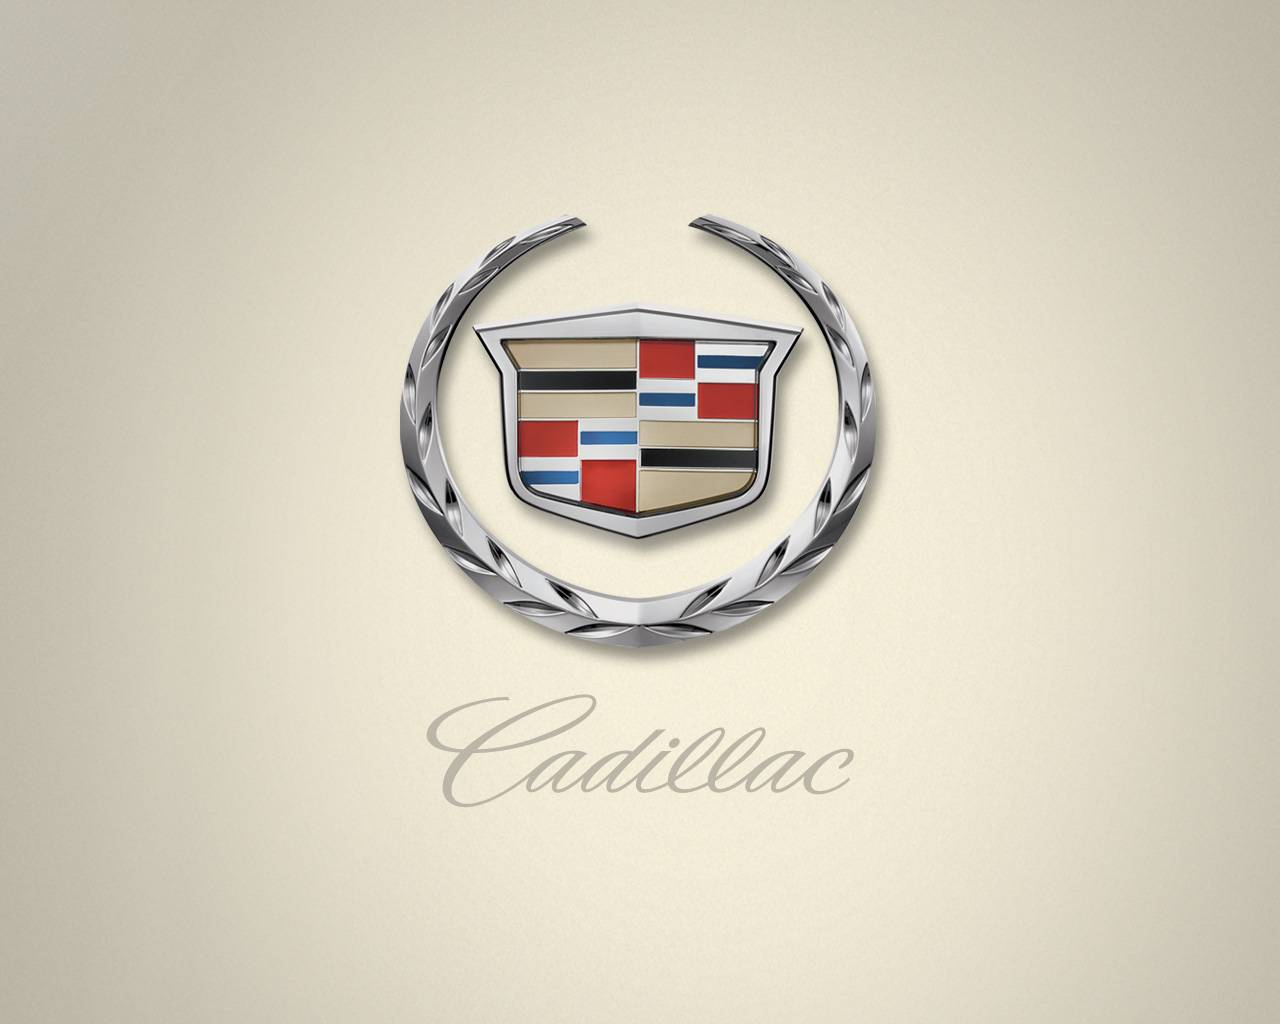 Wallpaper1 Cadillac Wallpaper